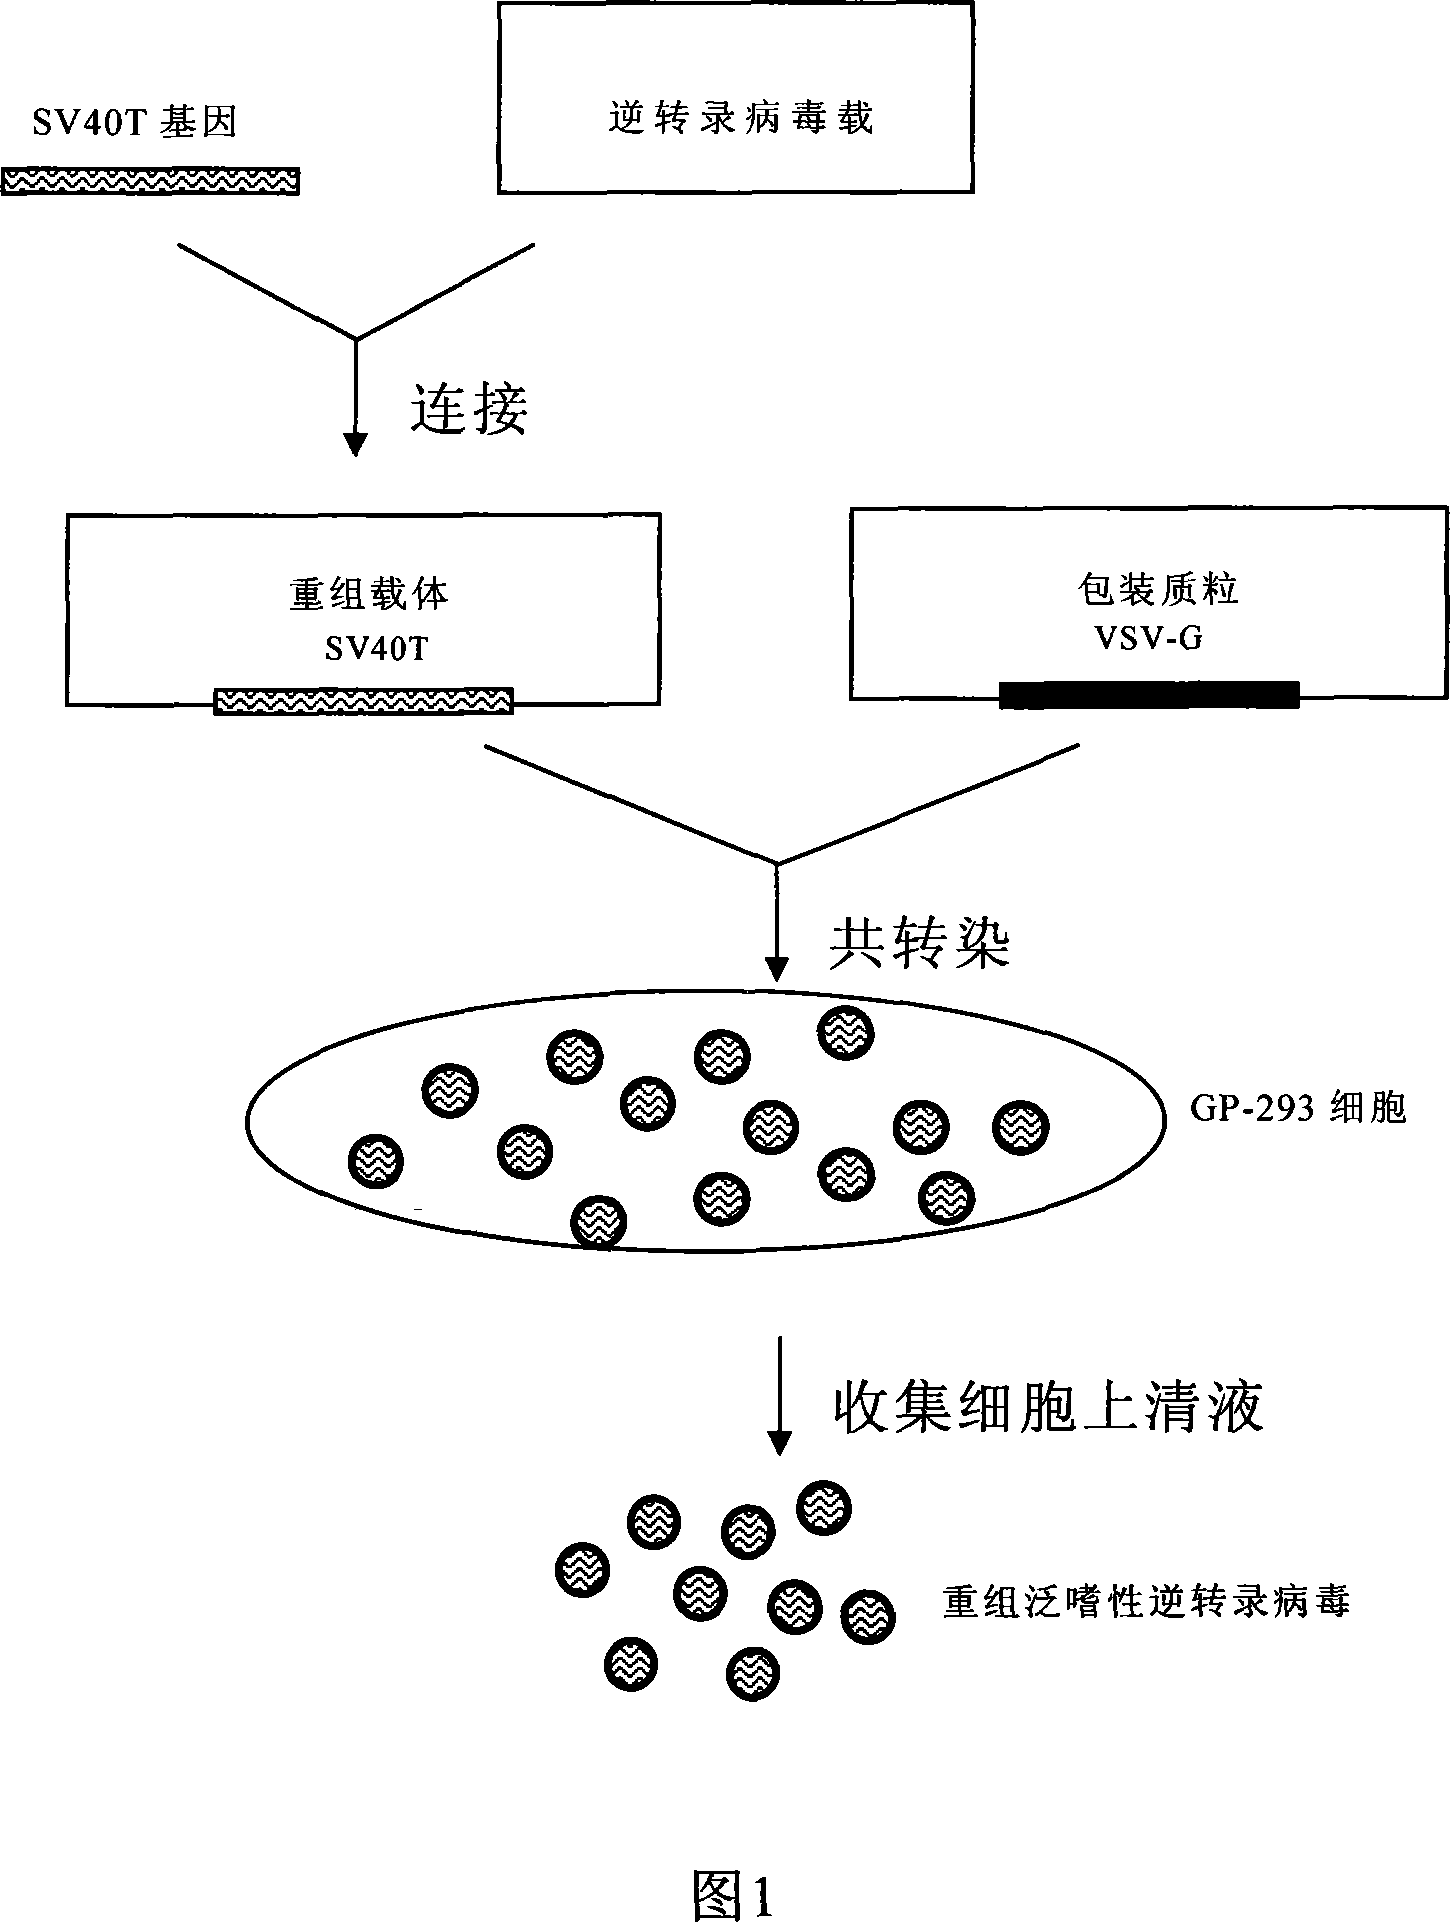 General purpose method for preparing integration type cell immortalization vector